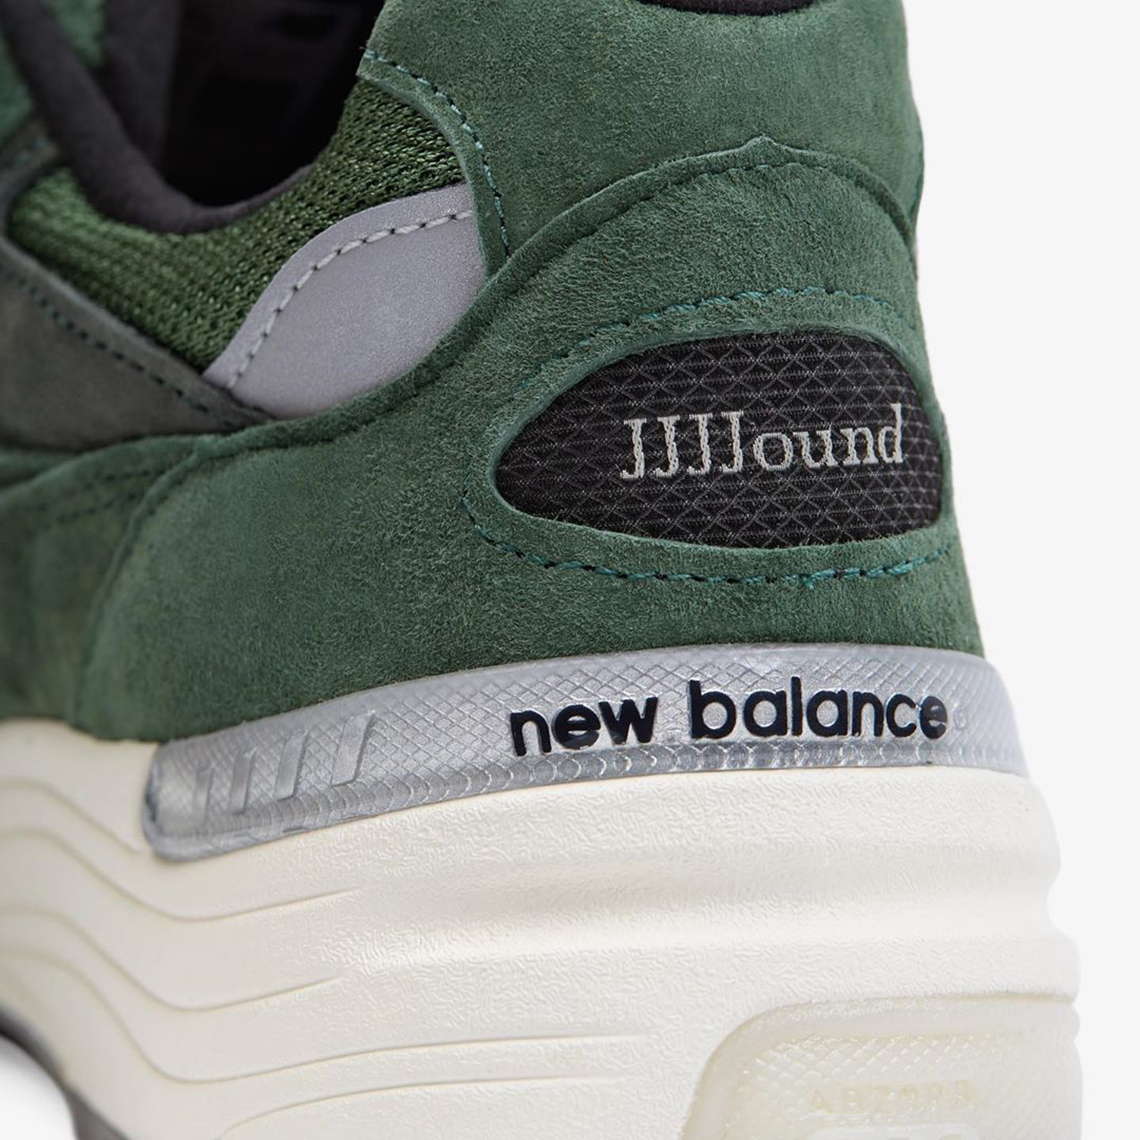 JJJJound New Balance 992 - Store List | SneakerNews.com